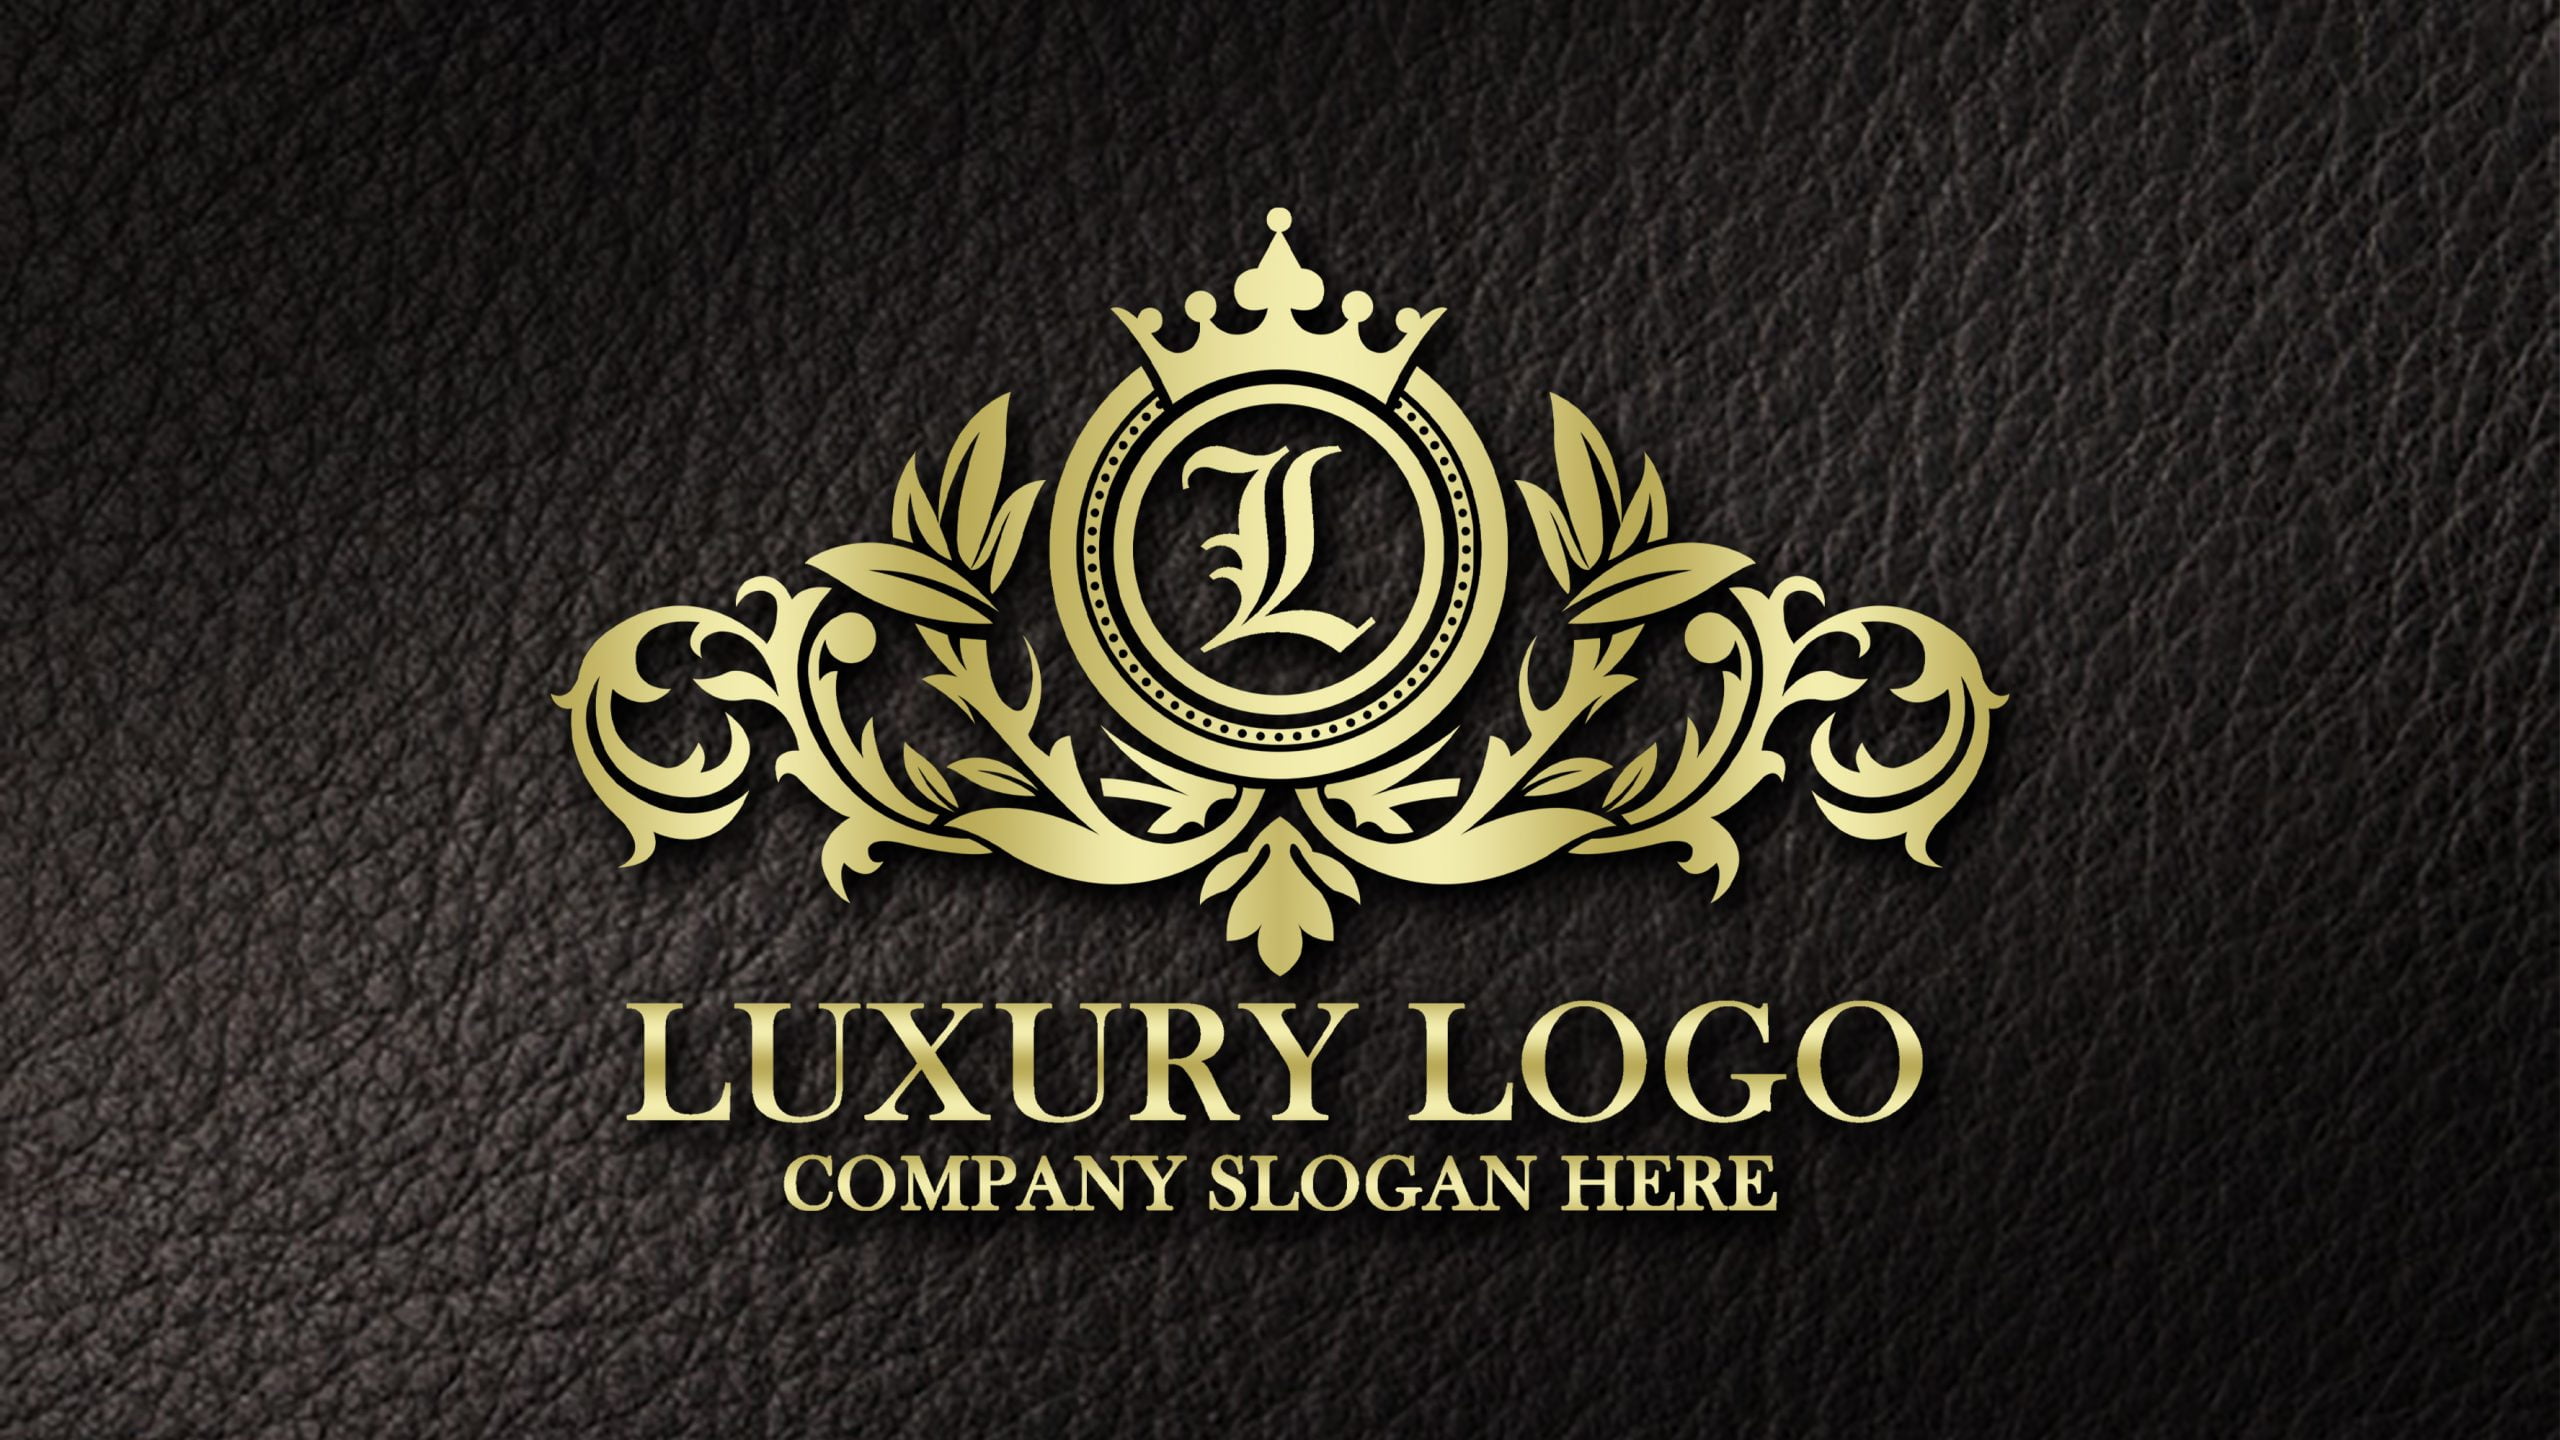 Logo Design Web Site Abseobcseo